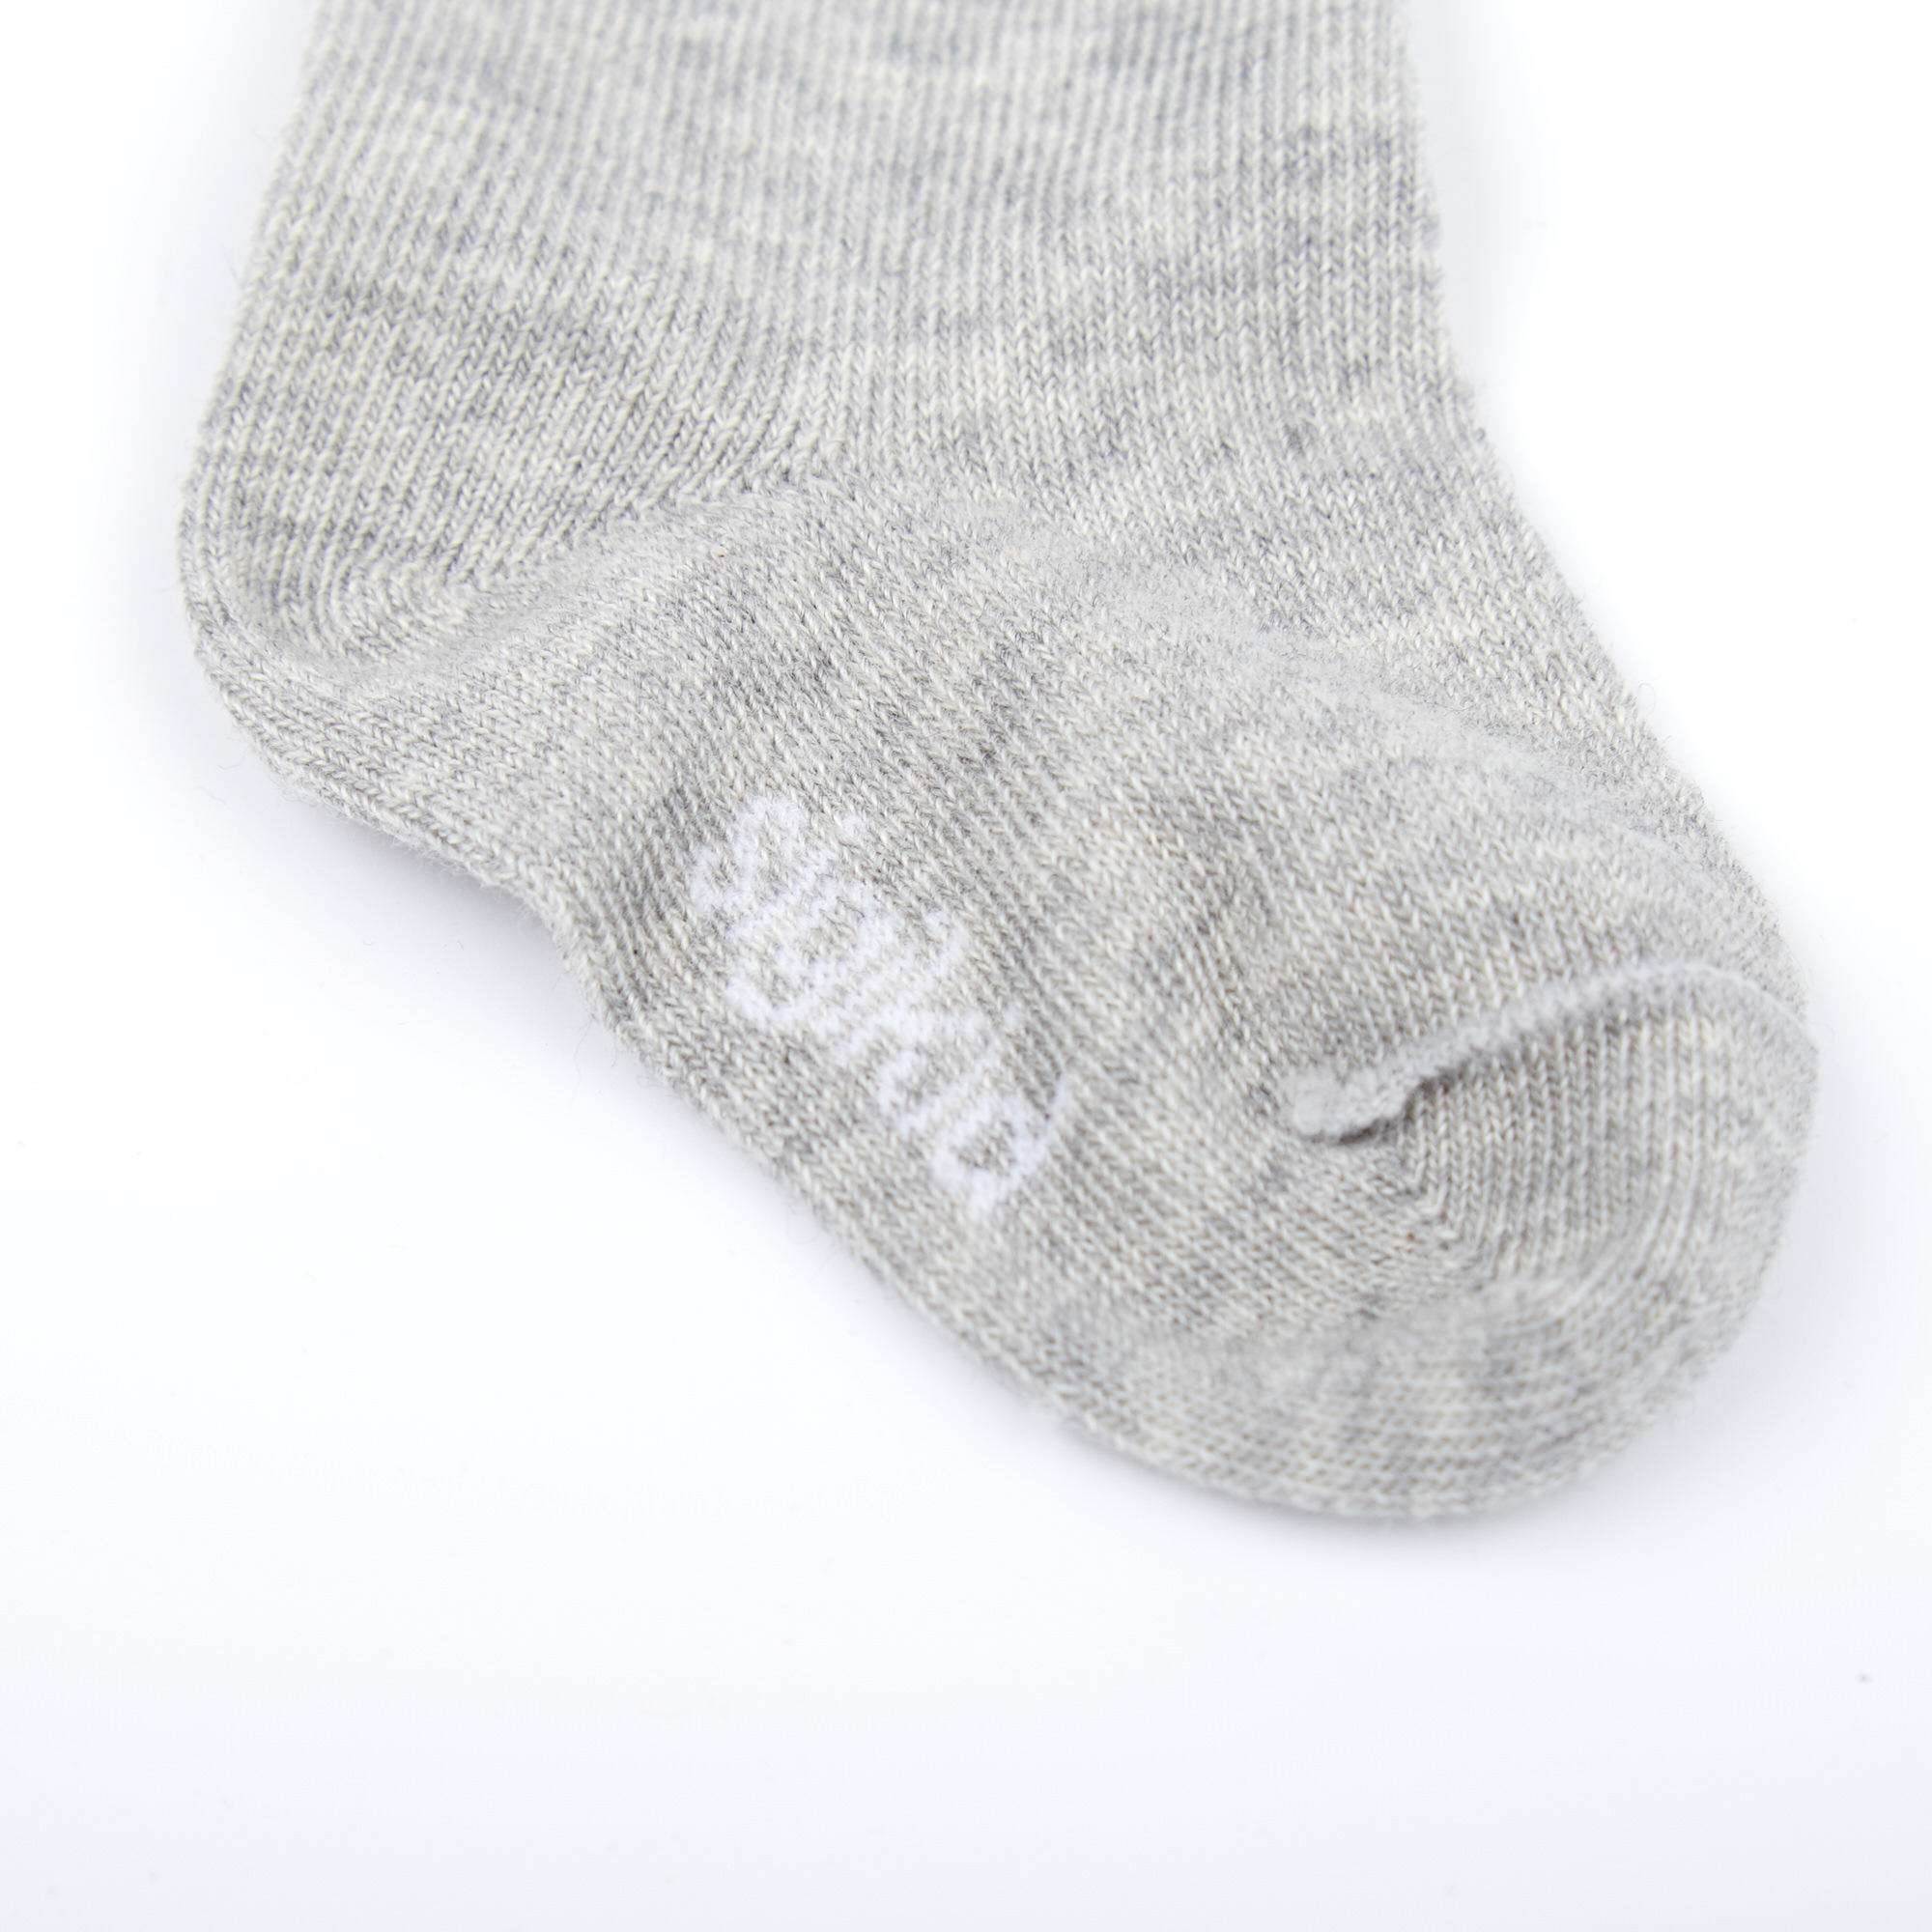 Baby socks light grey